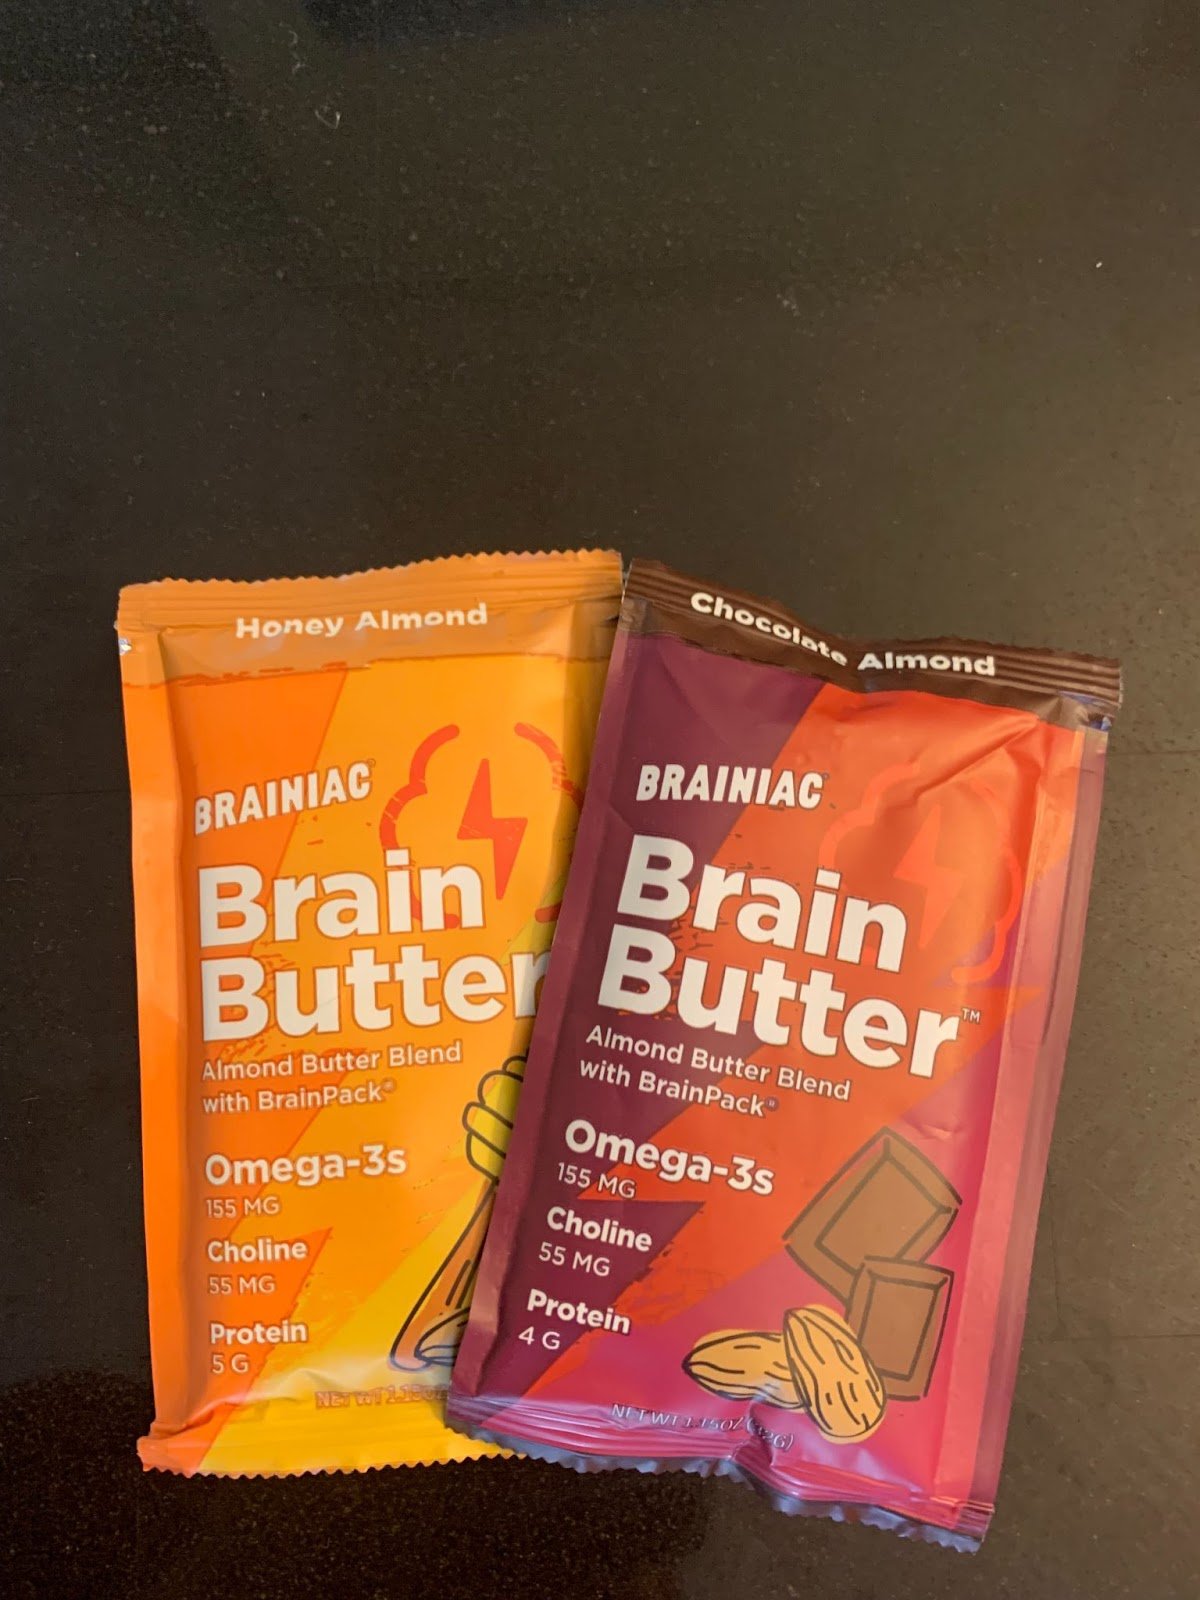 Braniac Brain Butter - Honey Almond and Chocolate Almond